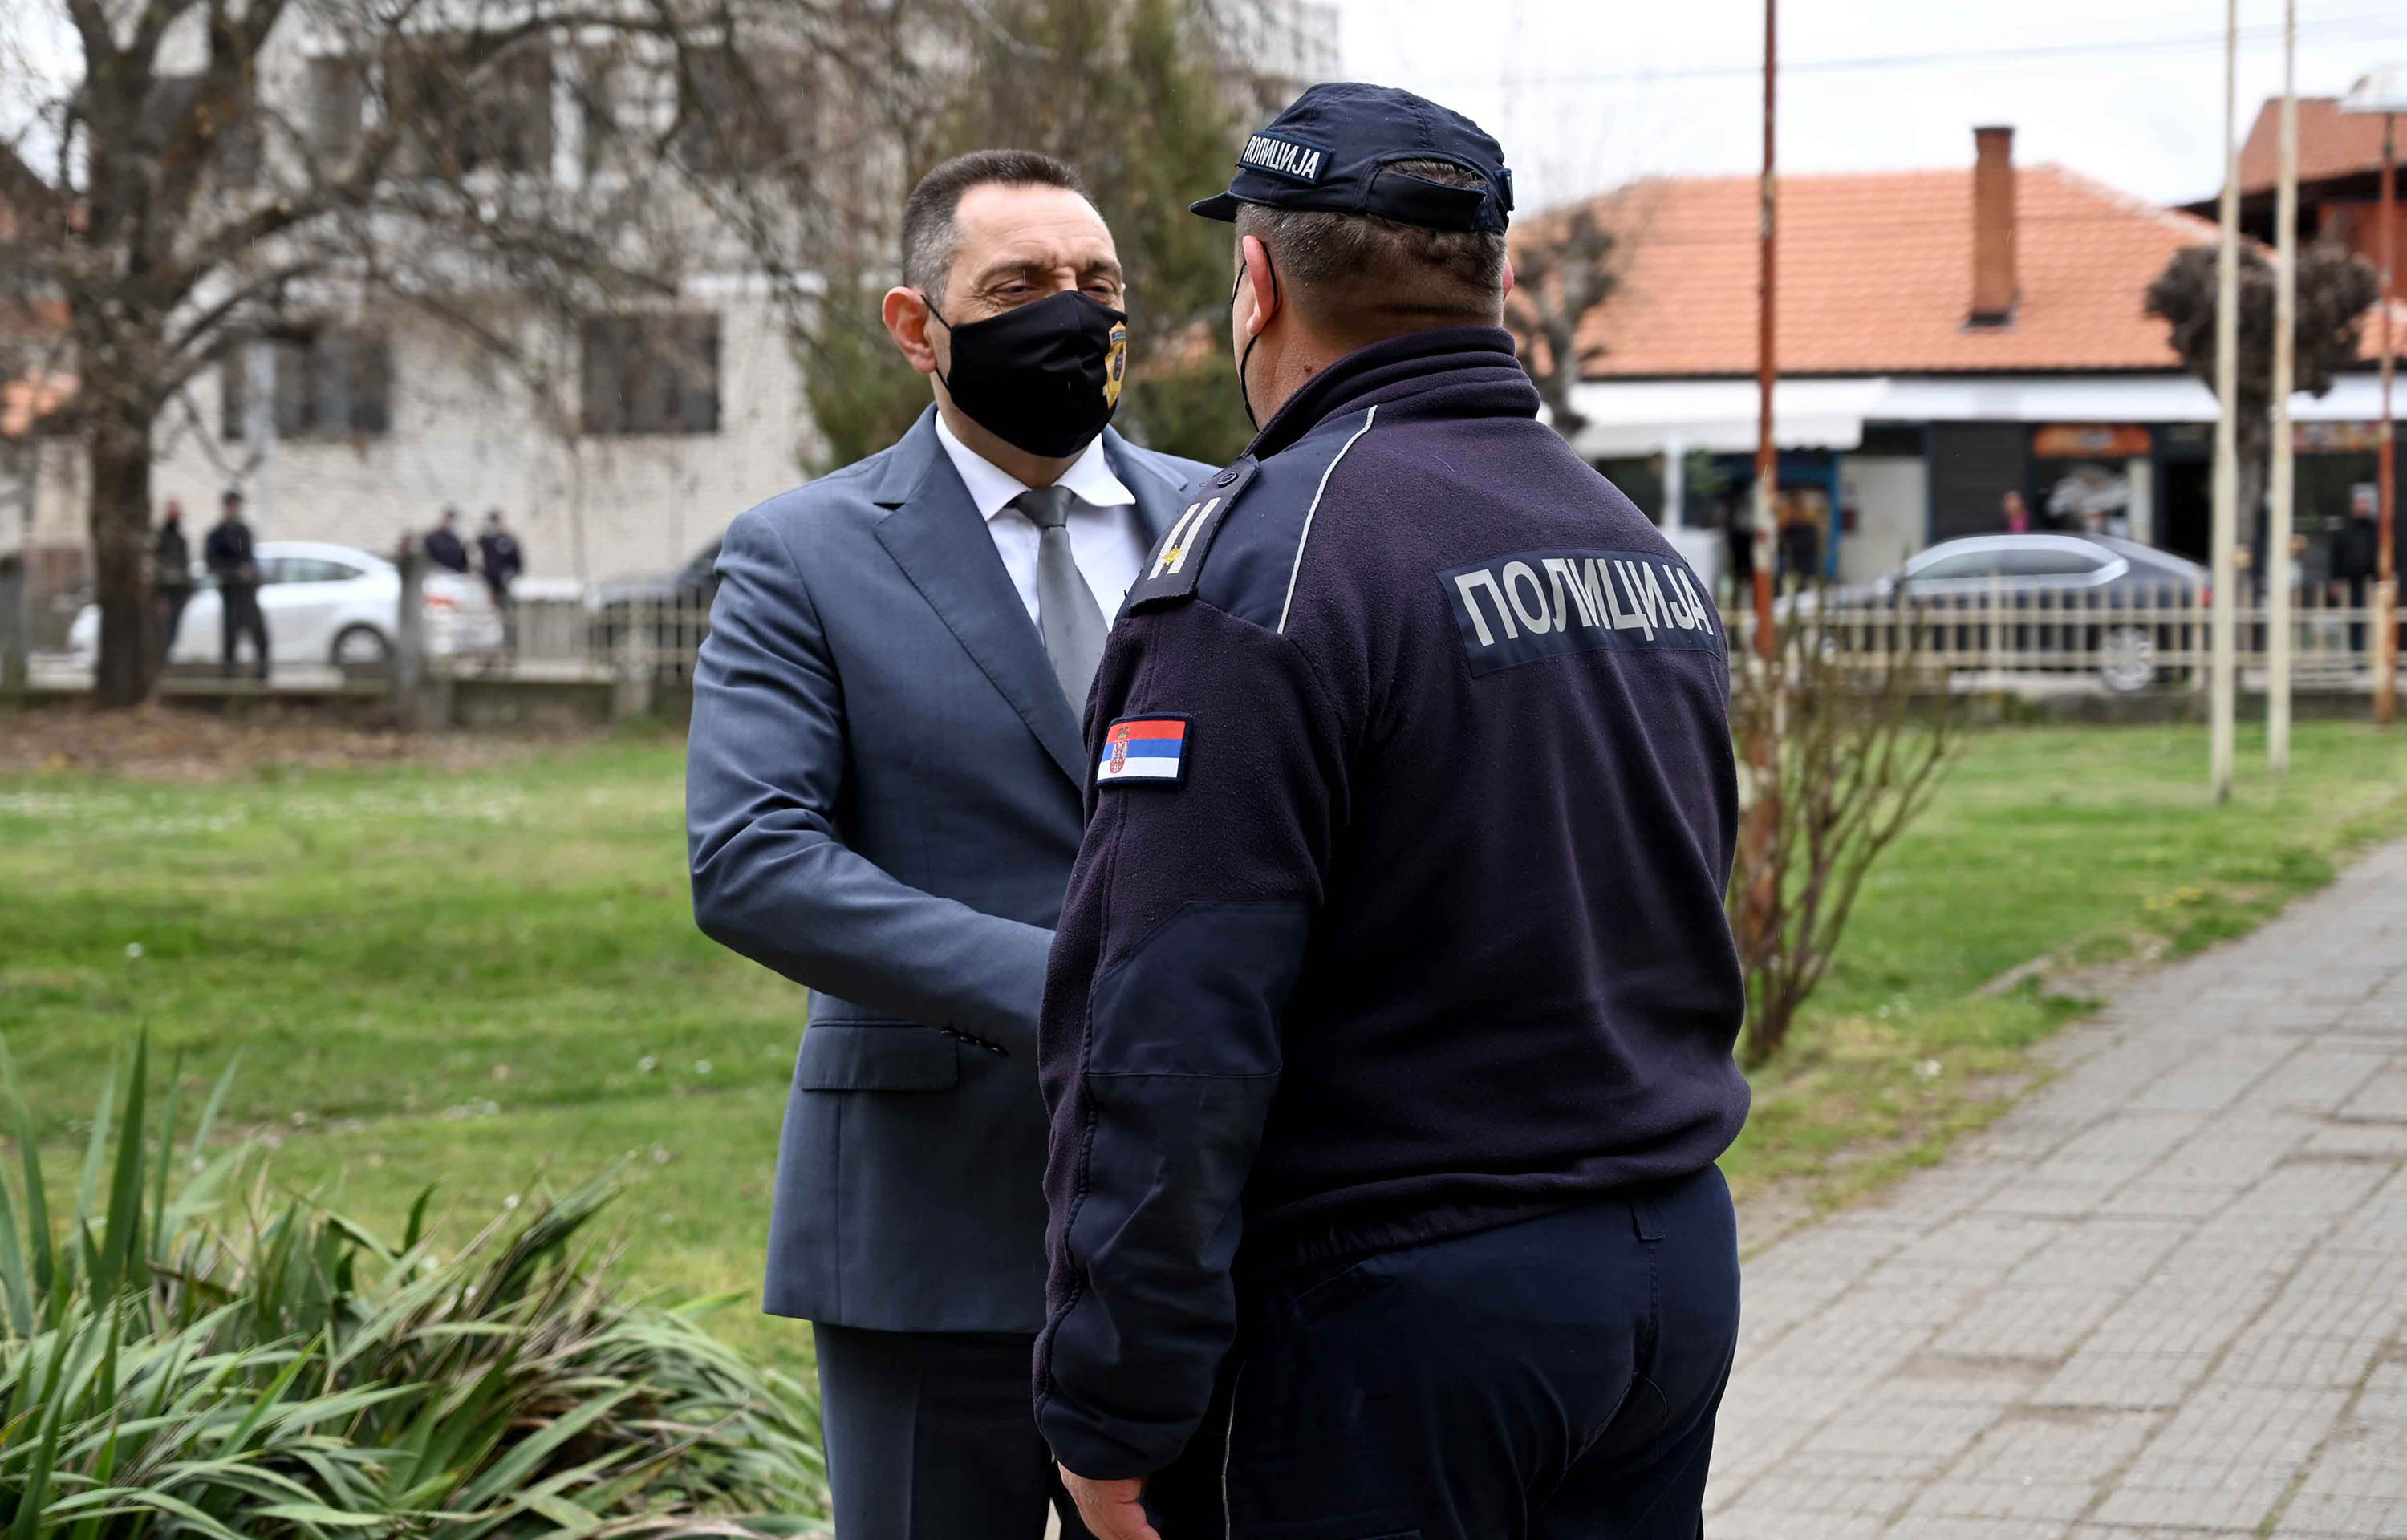 Ministar Vulin u Bujanovcu: U Srbiji se zakon bezuslovno poštuje i sprovodi